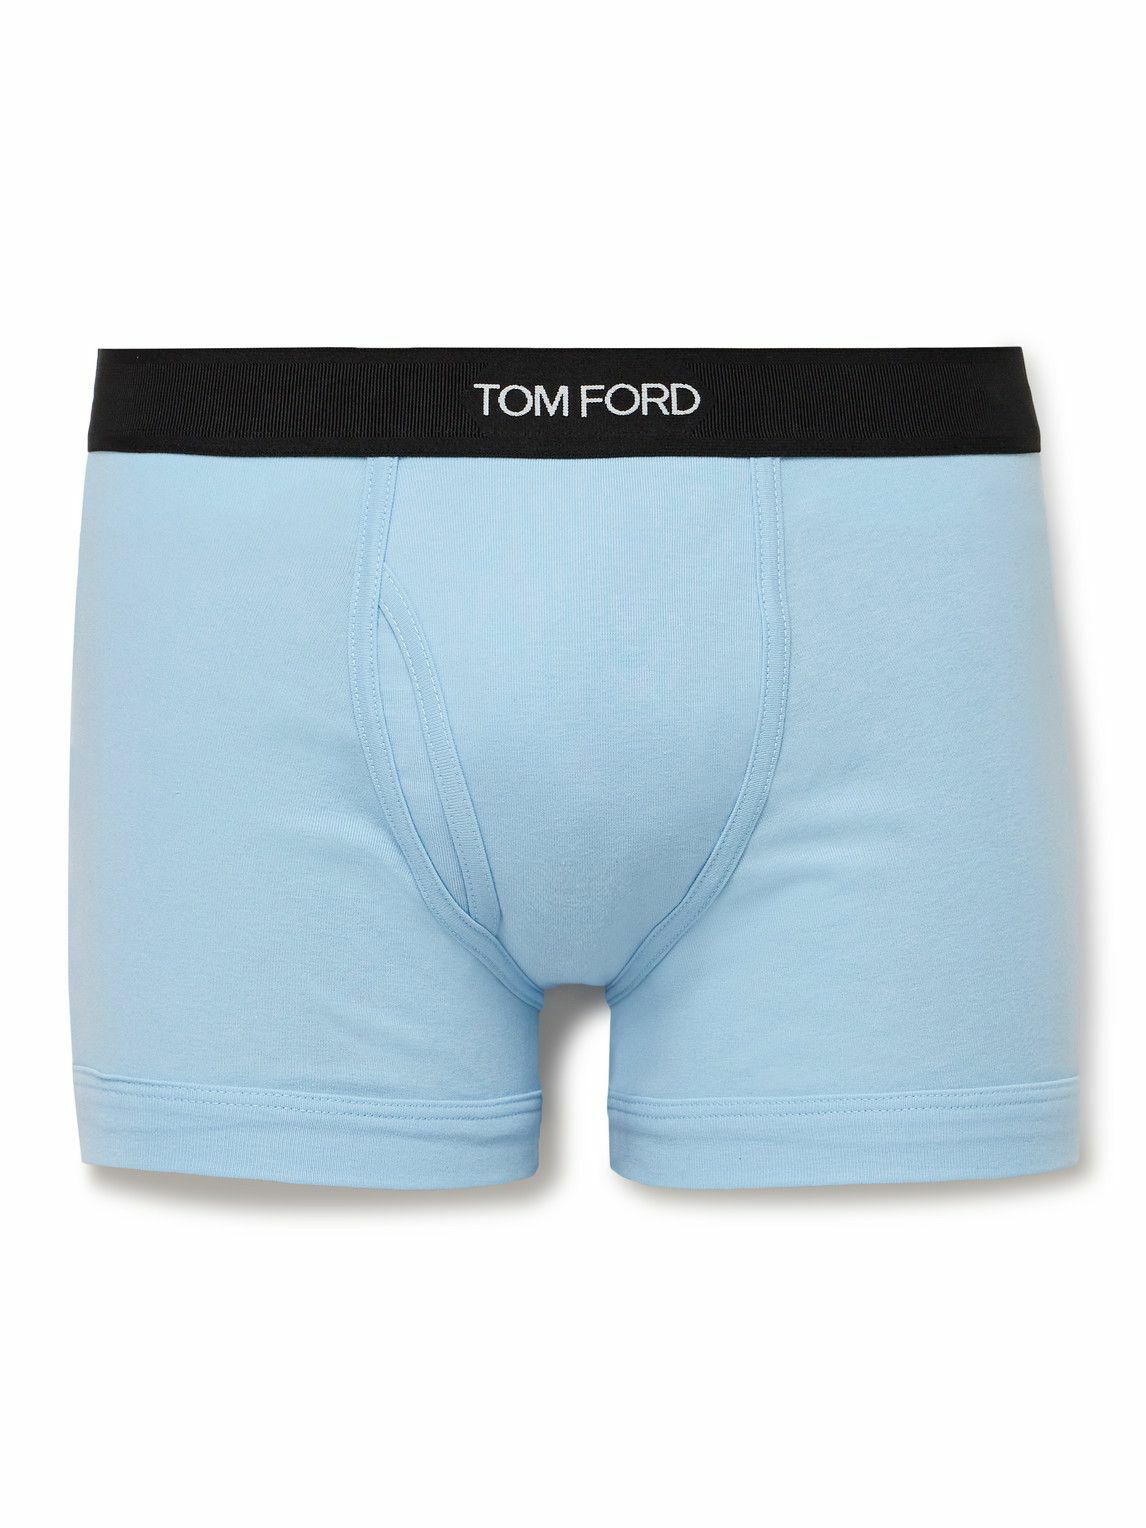 TOM FORD - Stretch-Cotton Boxer Briefs - Blue TOM FORD